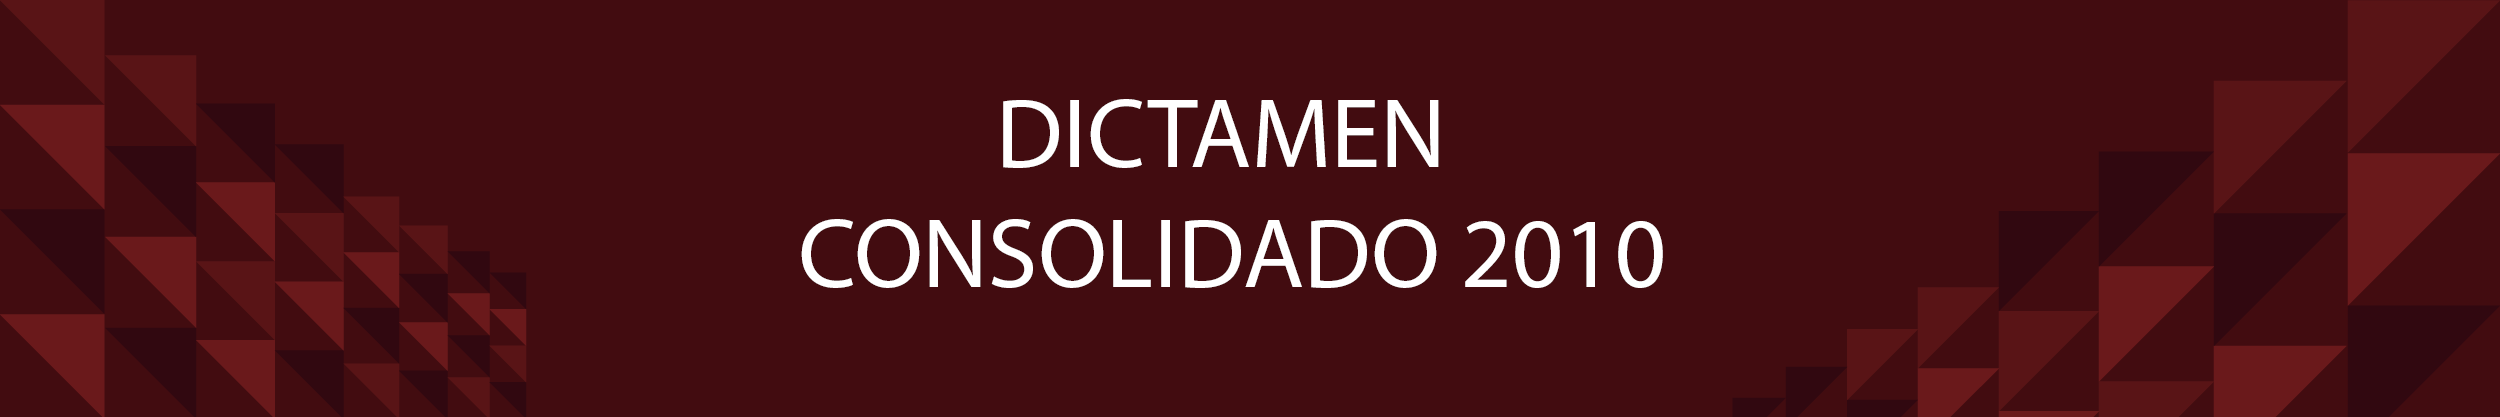 dictamenConsolidado2010